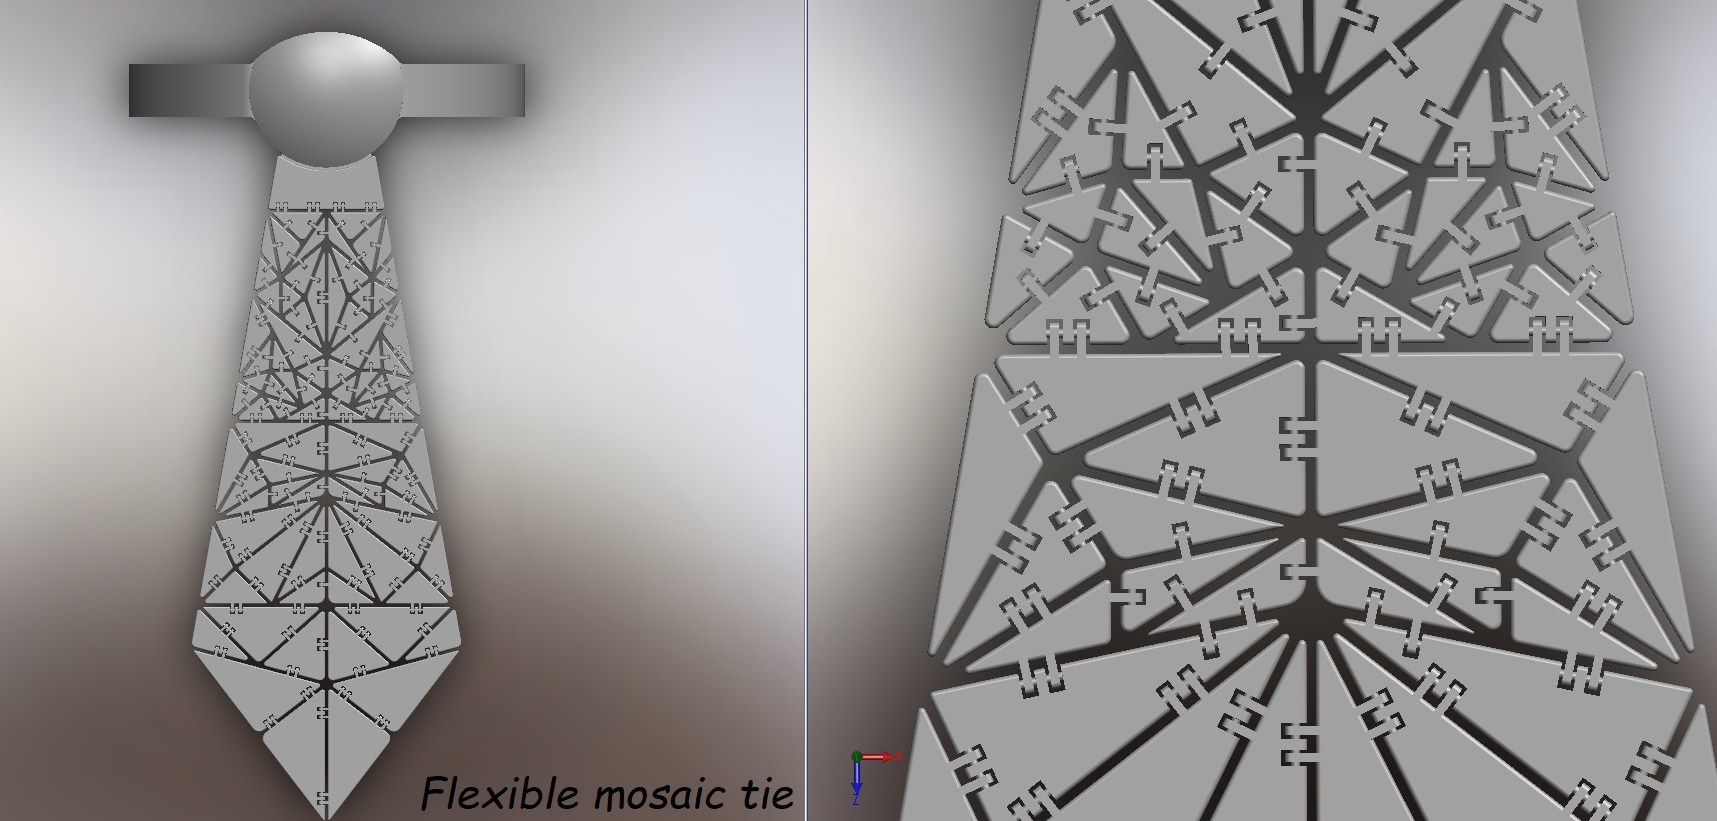 Flexible mosaic tie